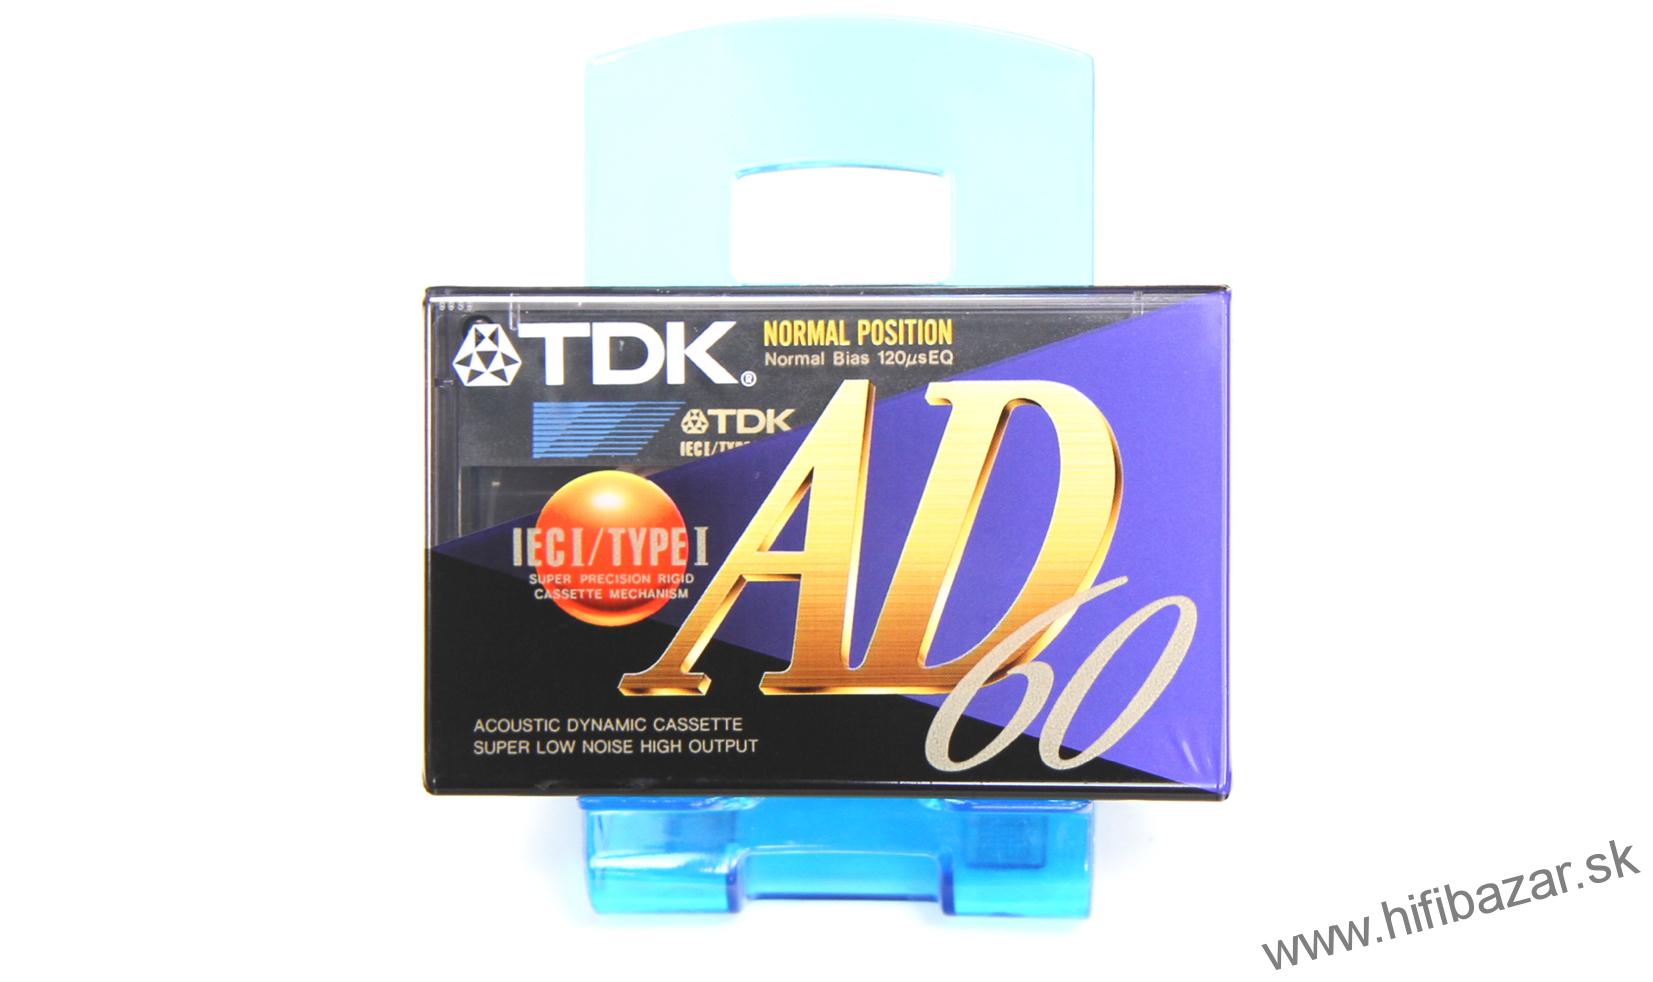 TDK AD-60 Acoustic Dynamics